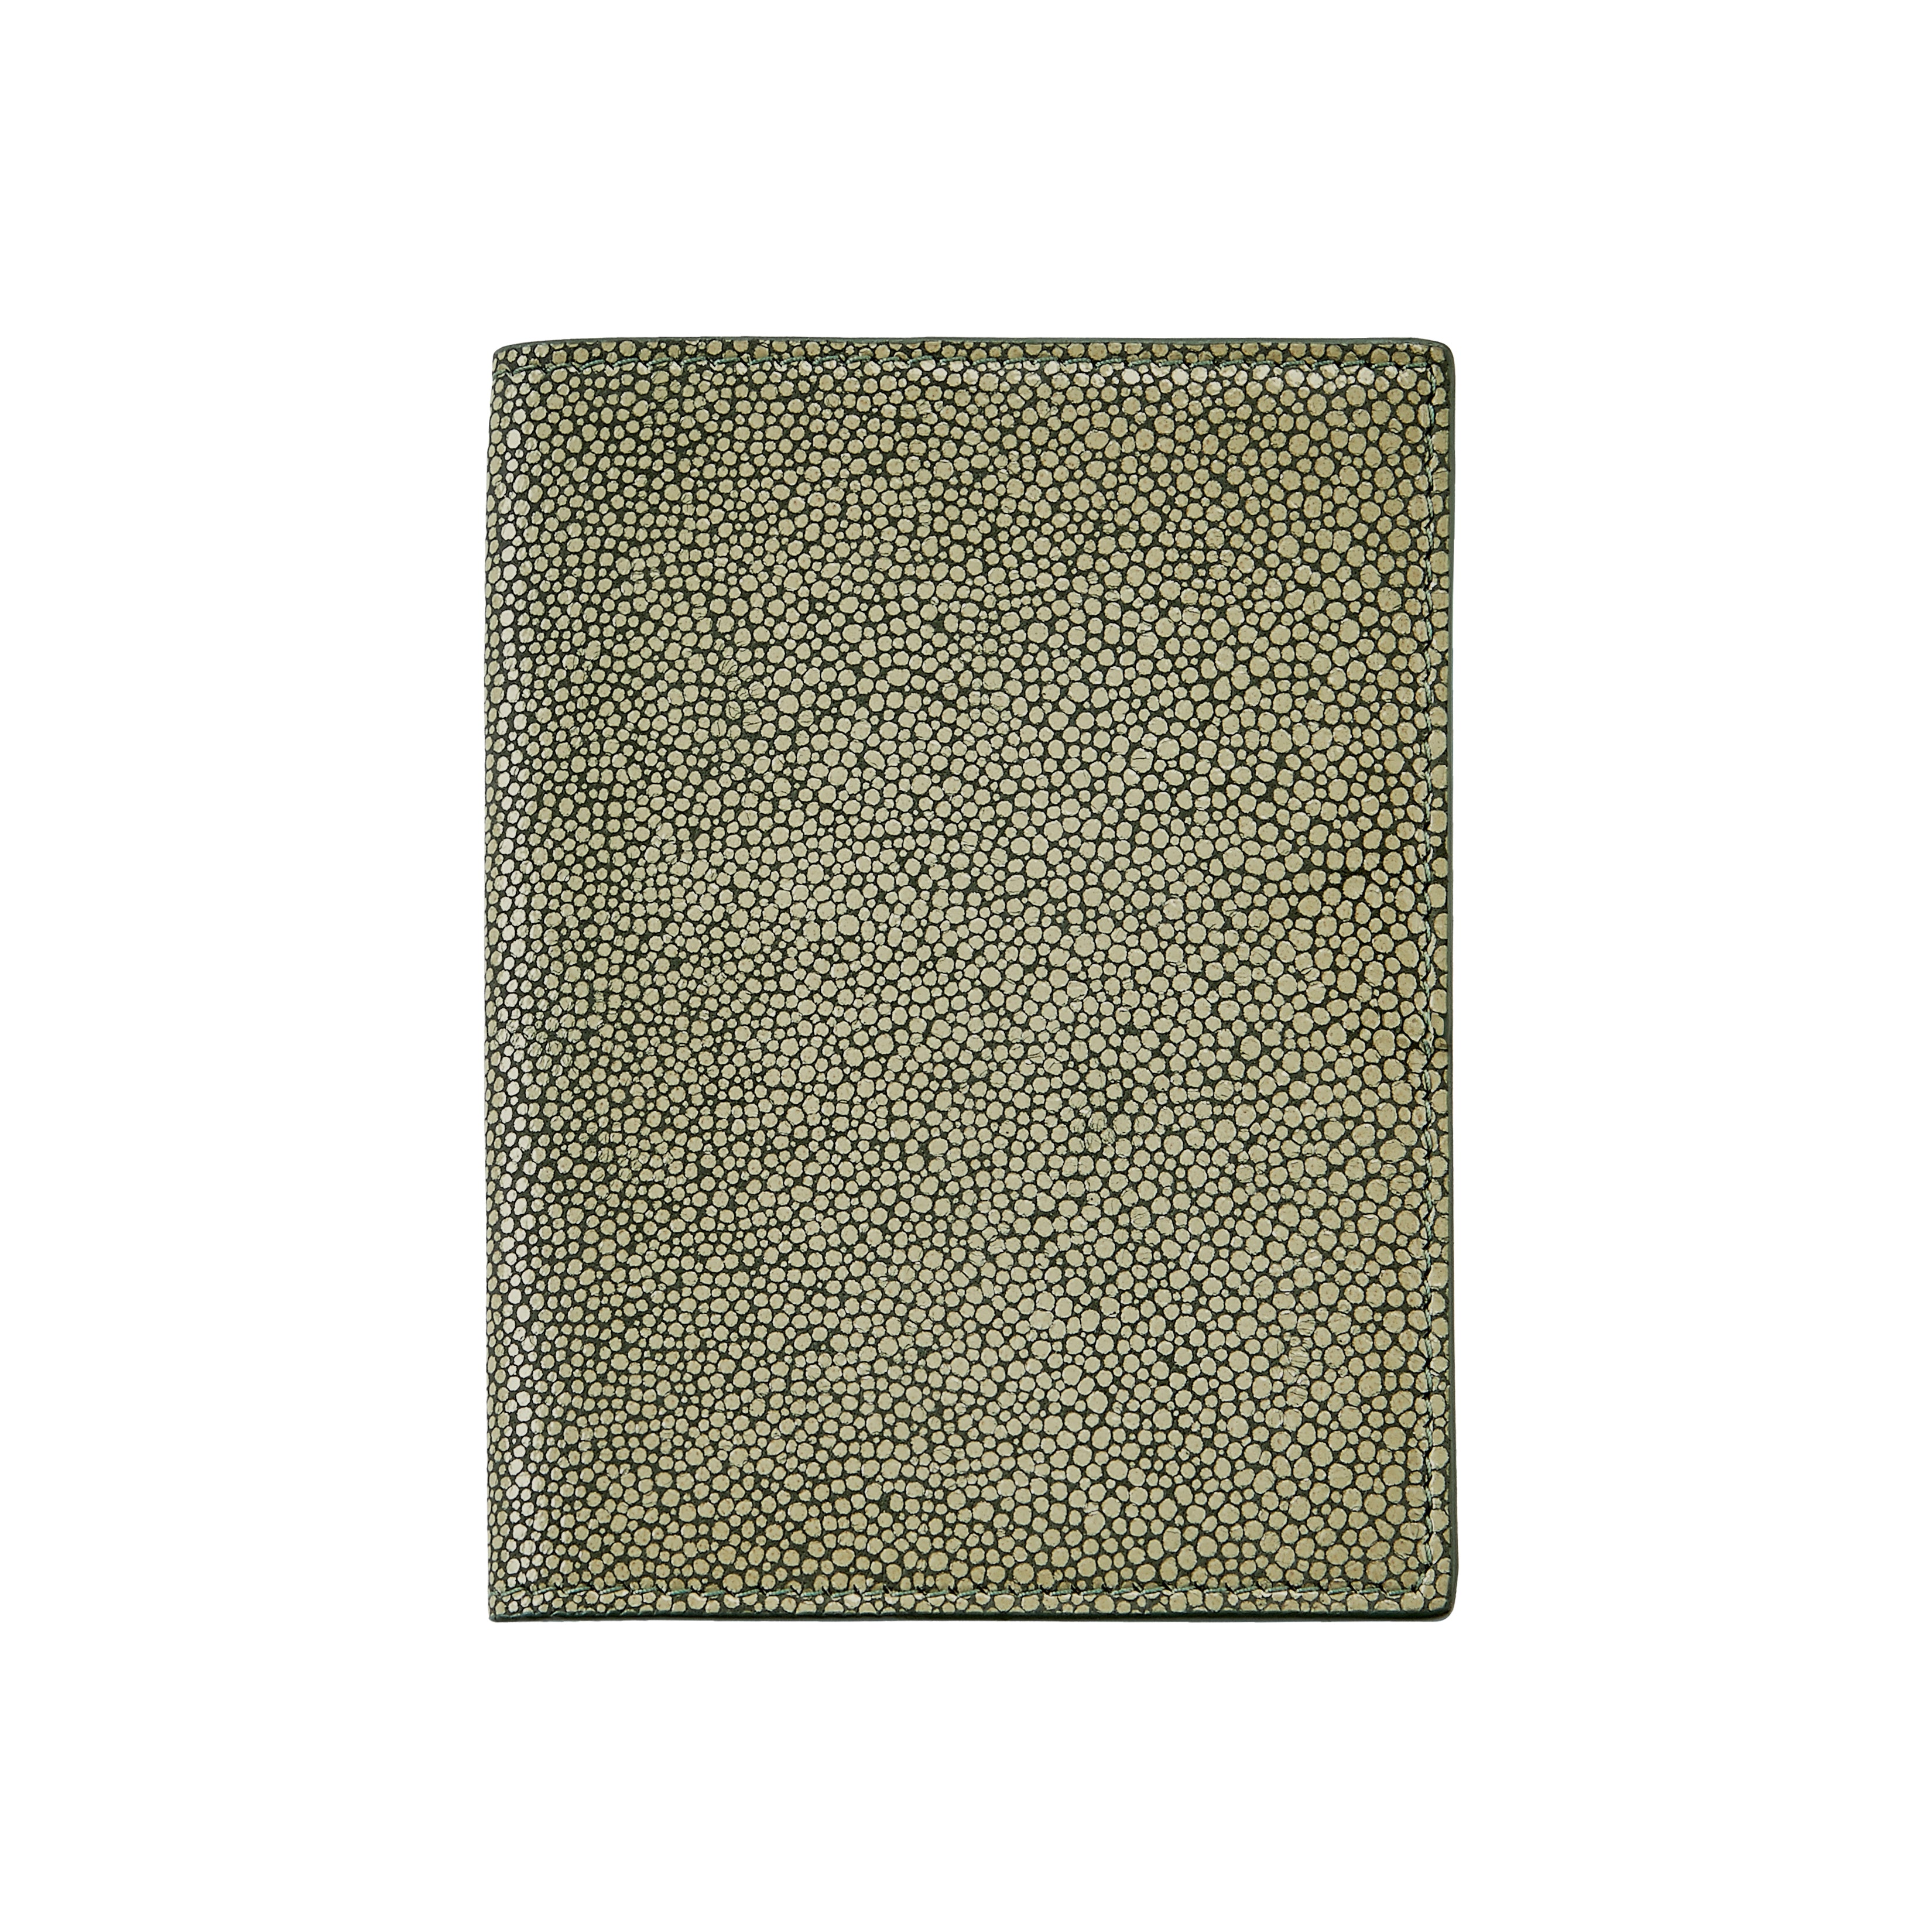 Graphic Image Passport Holder Embossed Green Shagreen Leather